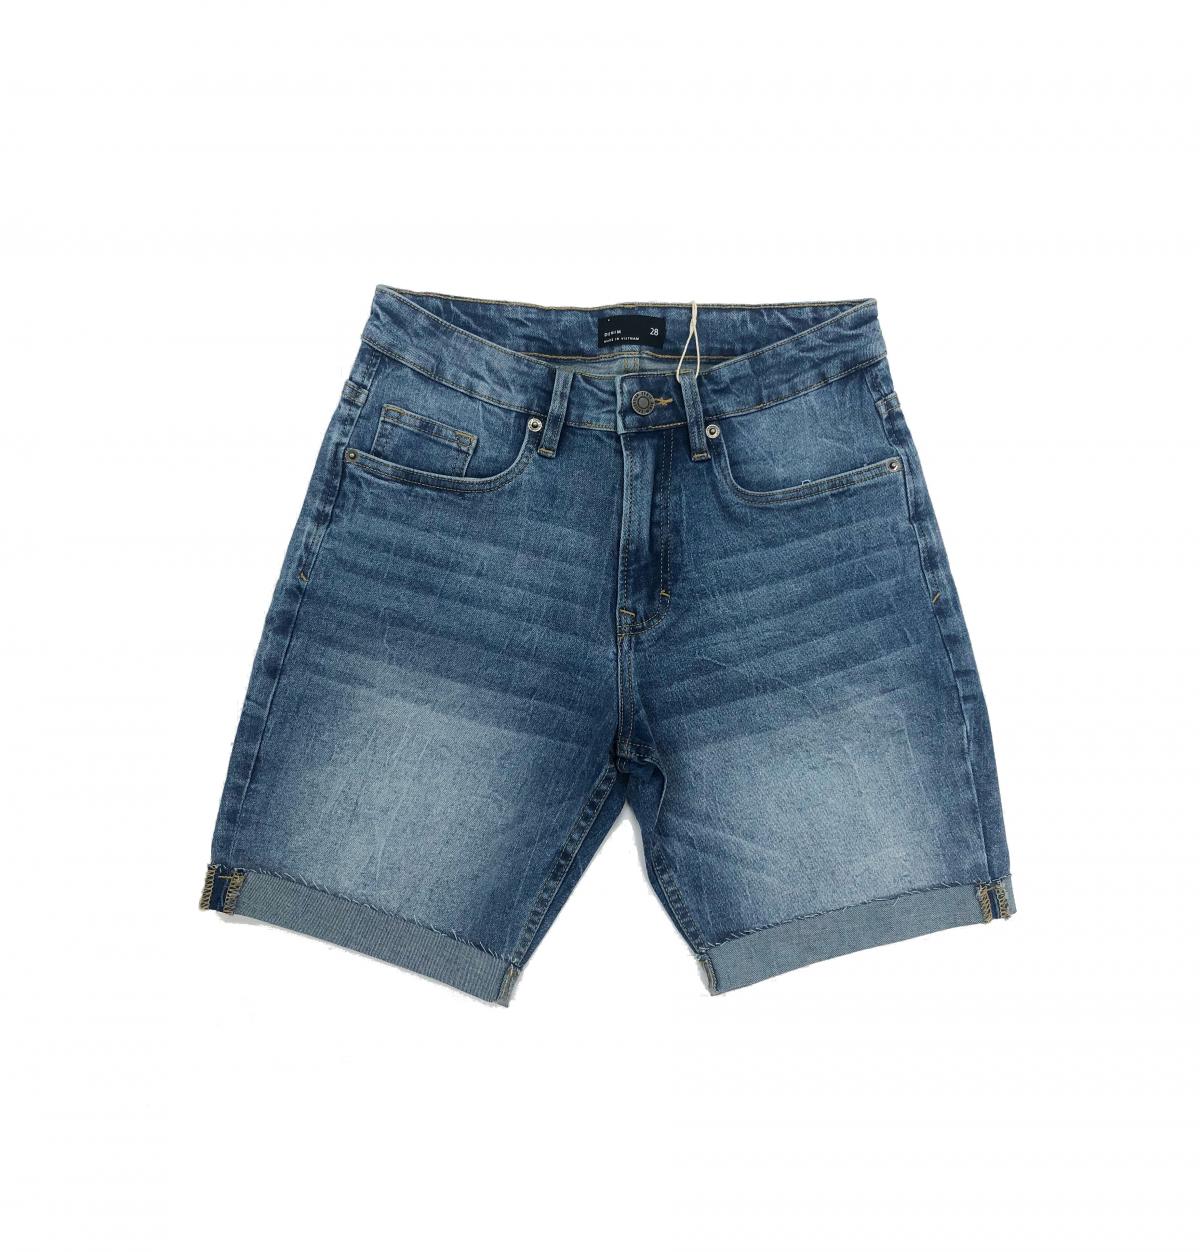 Men's Jeans Shorts SS0003 #0